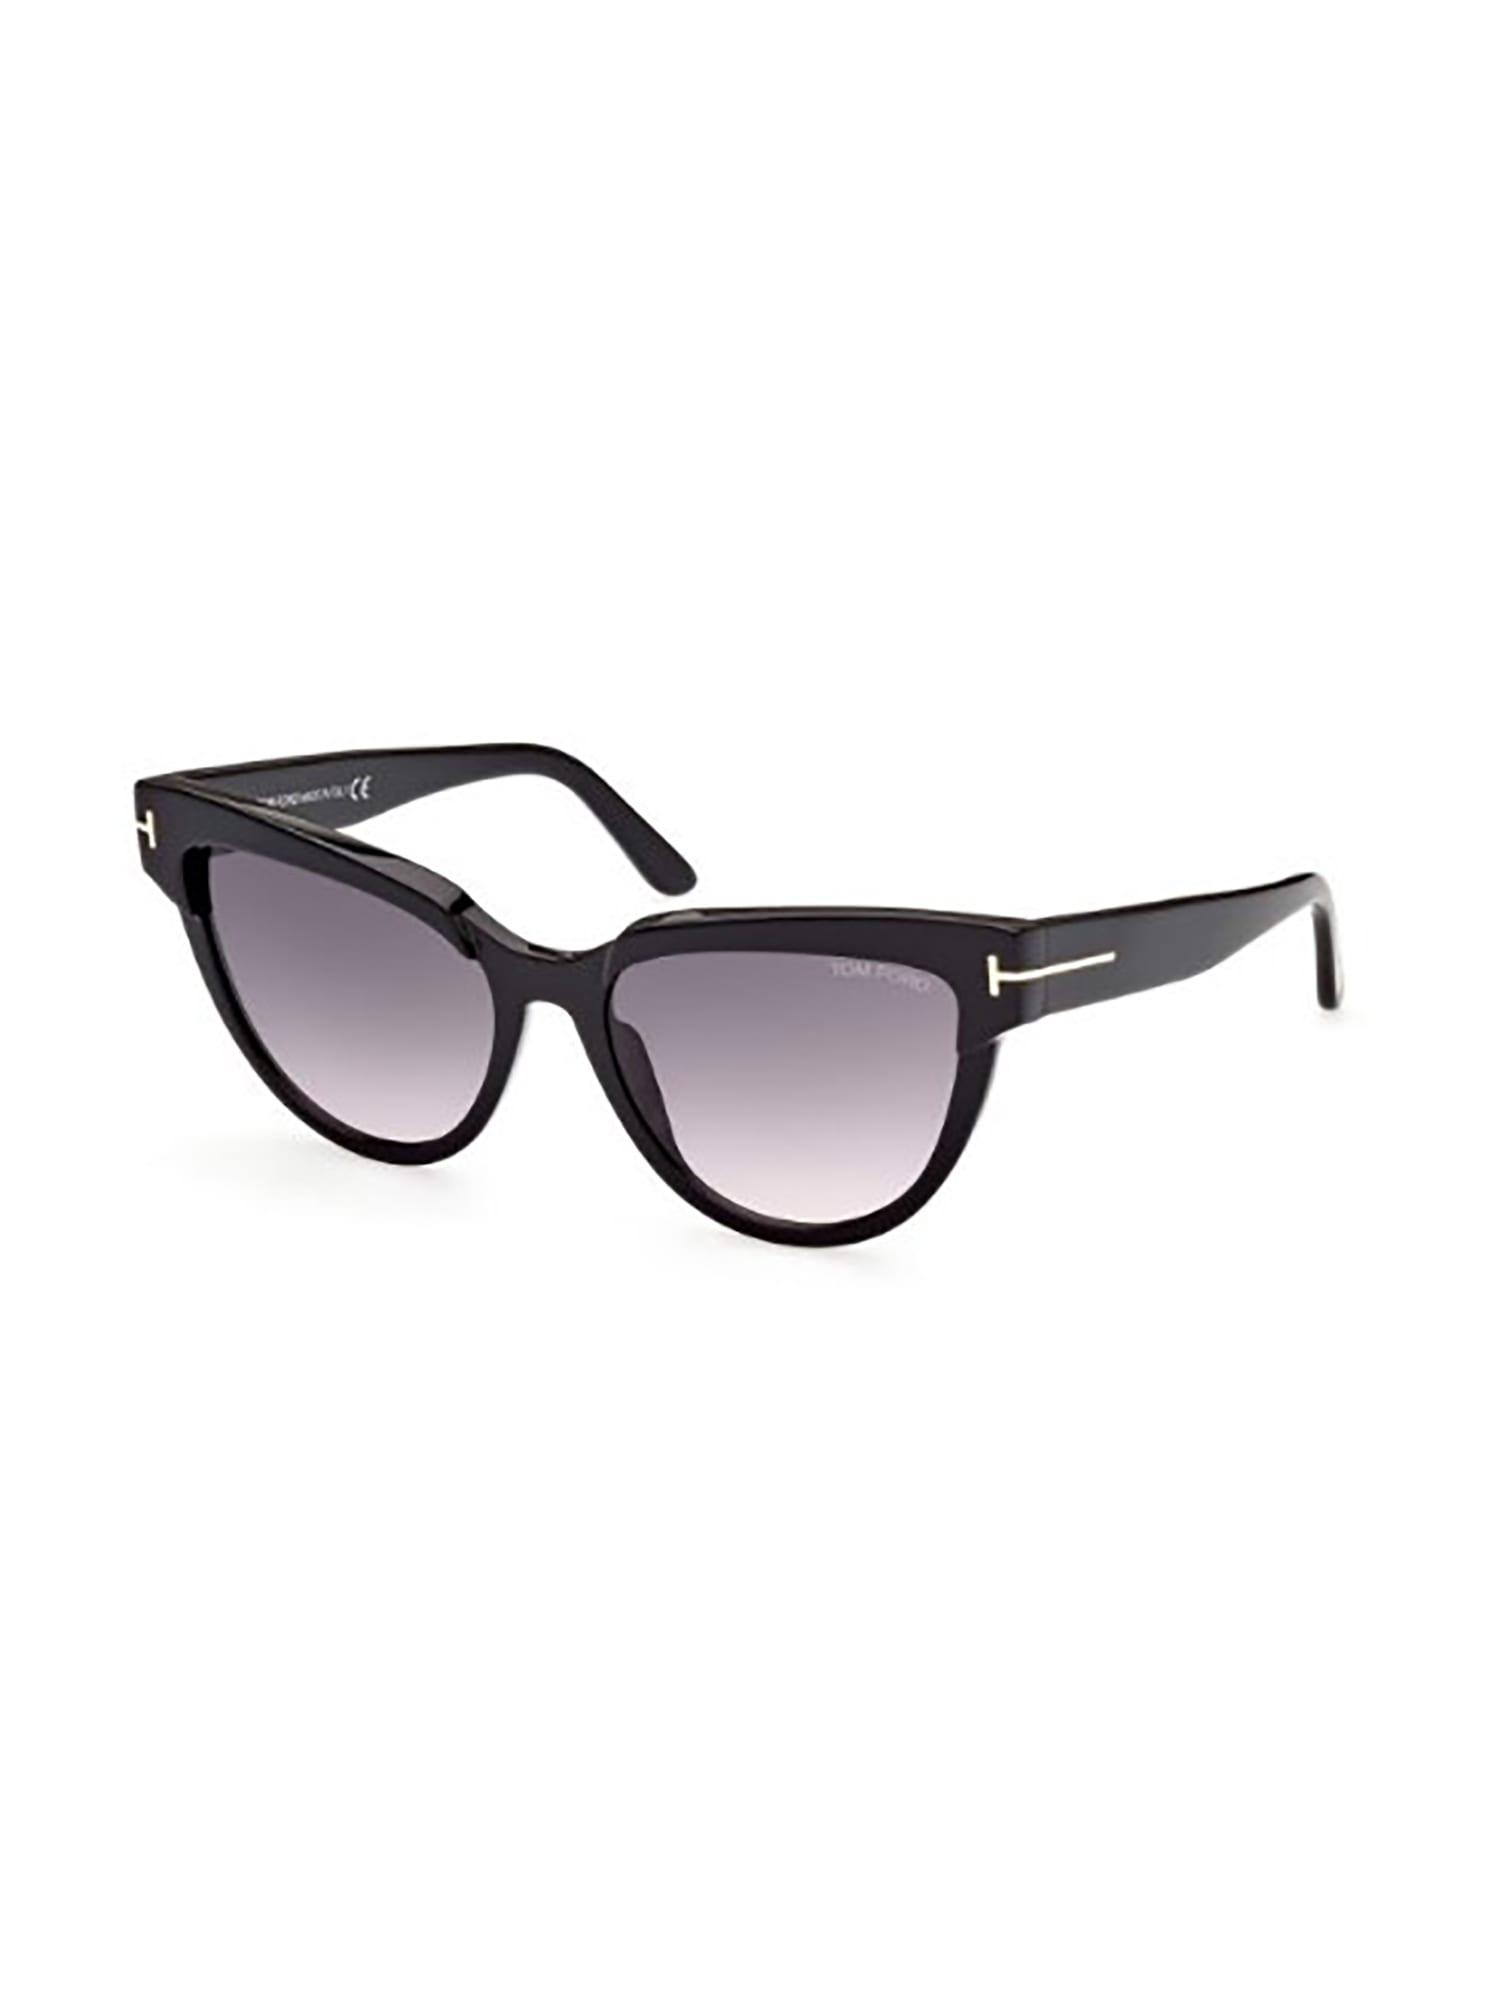 Womens Sunglasses Tom Ford Sunglasses - Save 28% Tom Ford Metal Sunglasses in b Black 